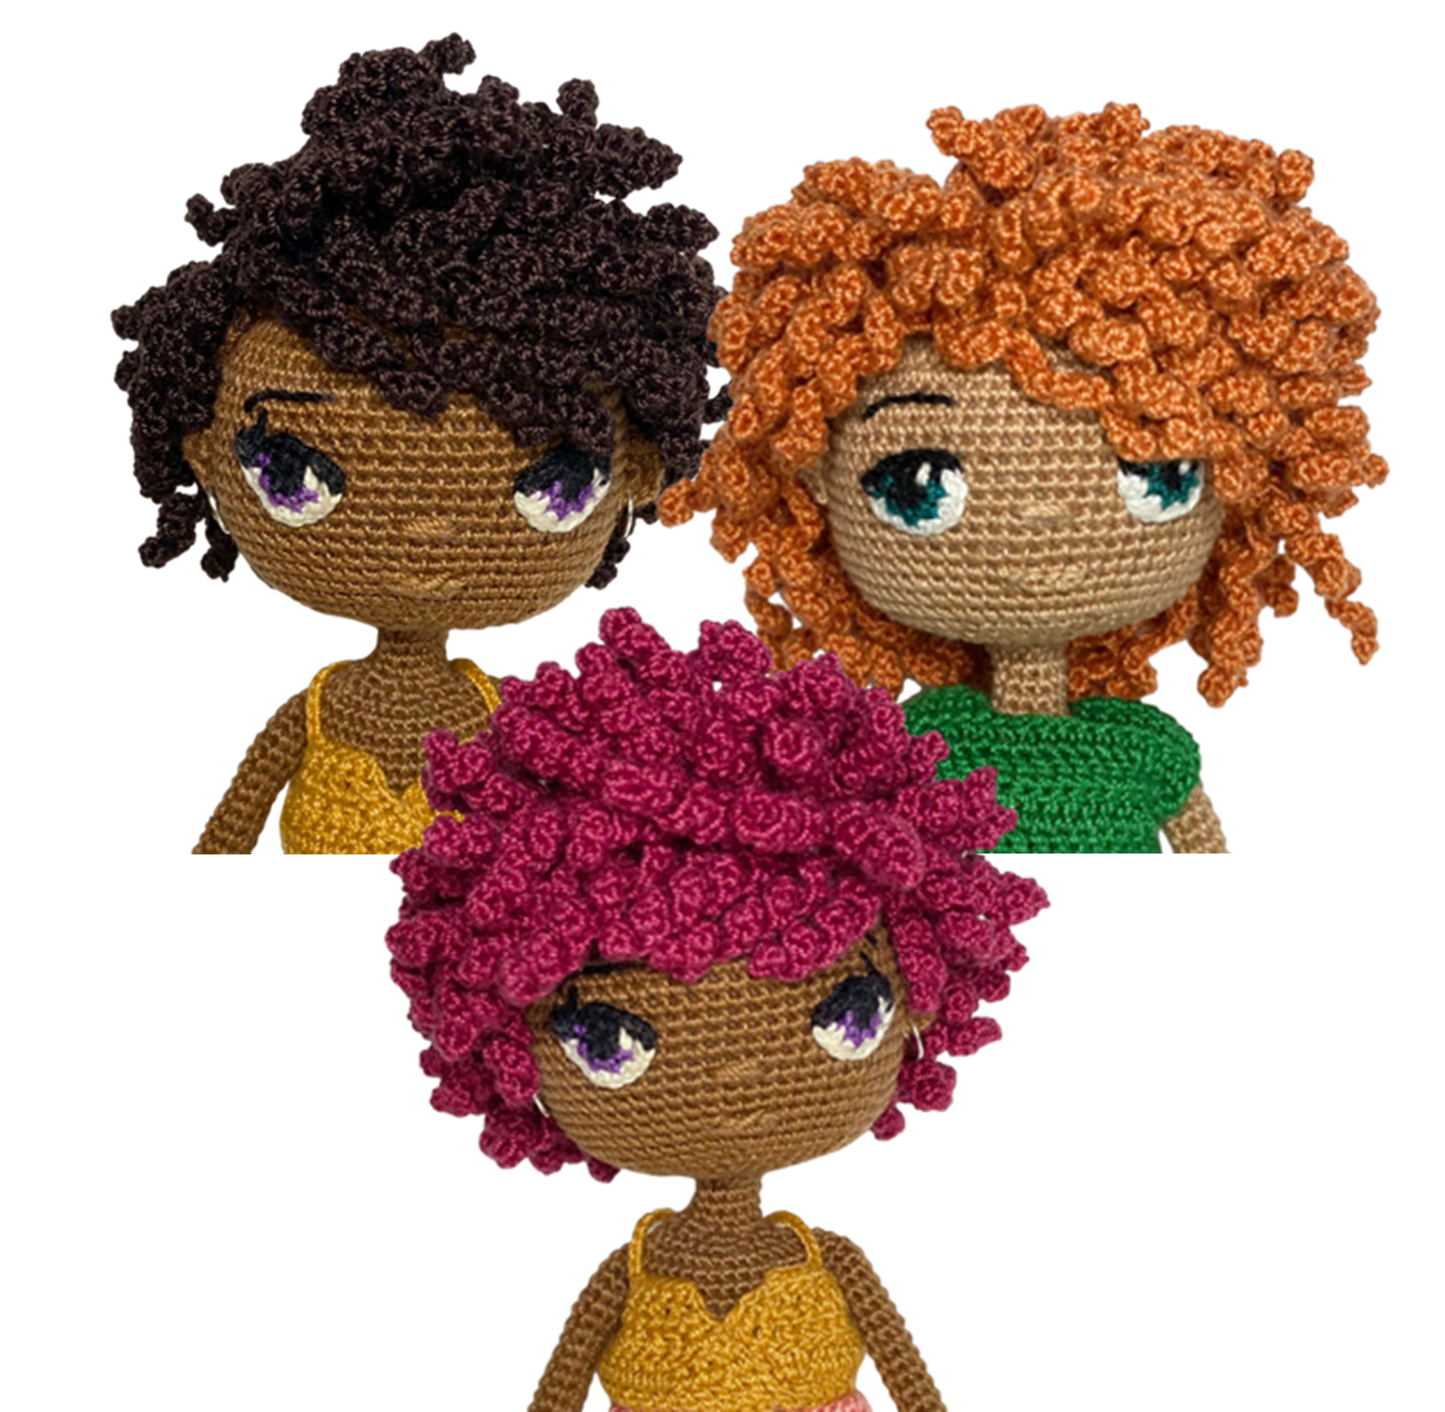 Mini Doll Wigs  |  Crochet Patterns